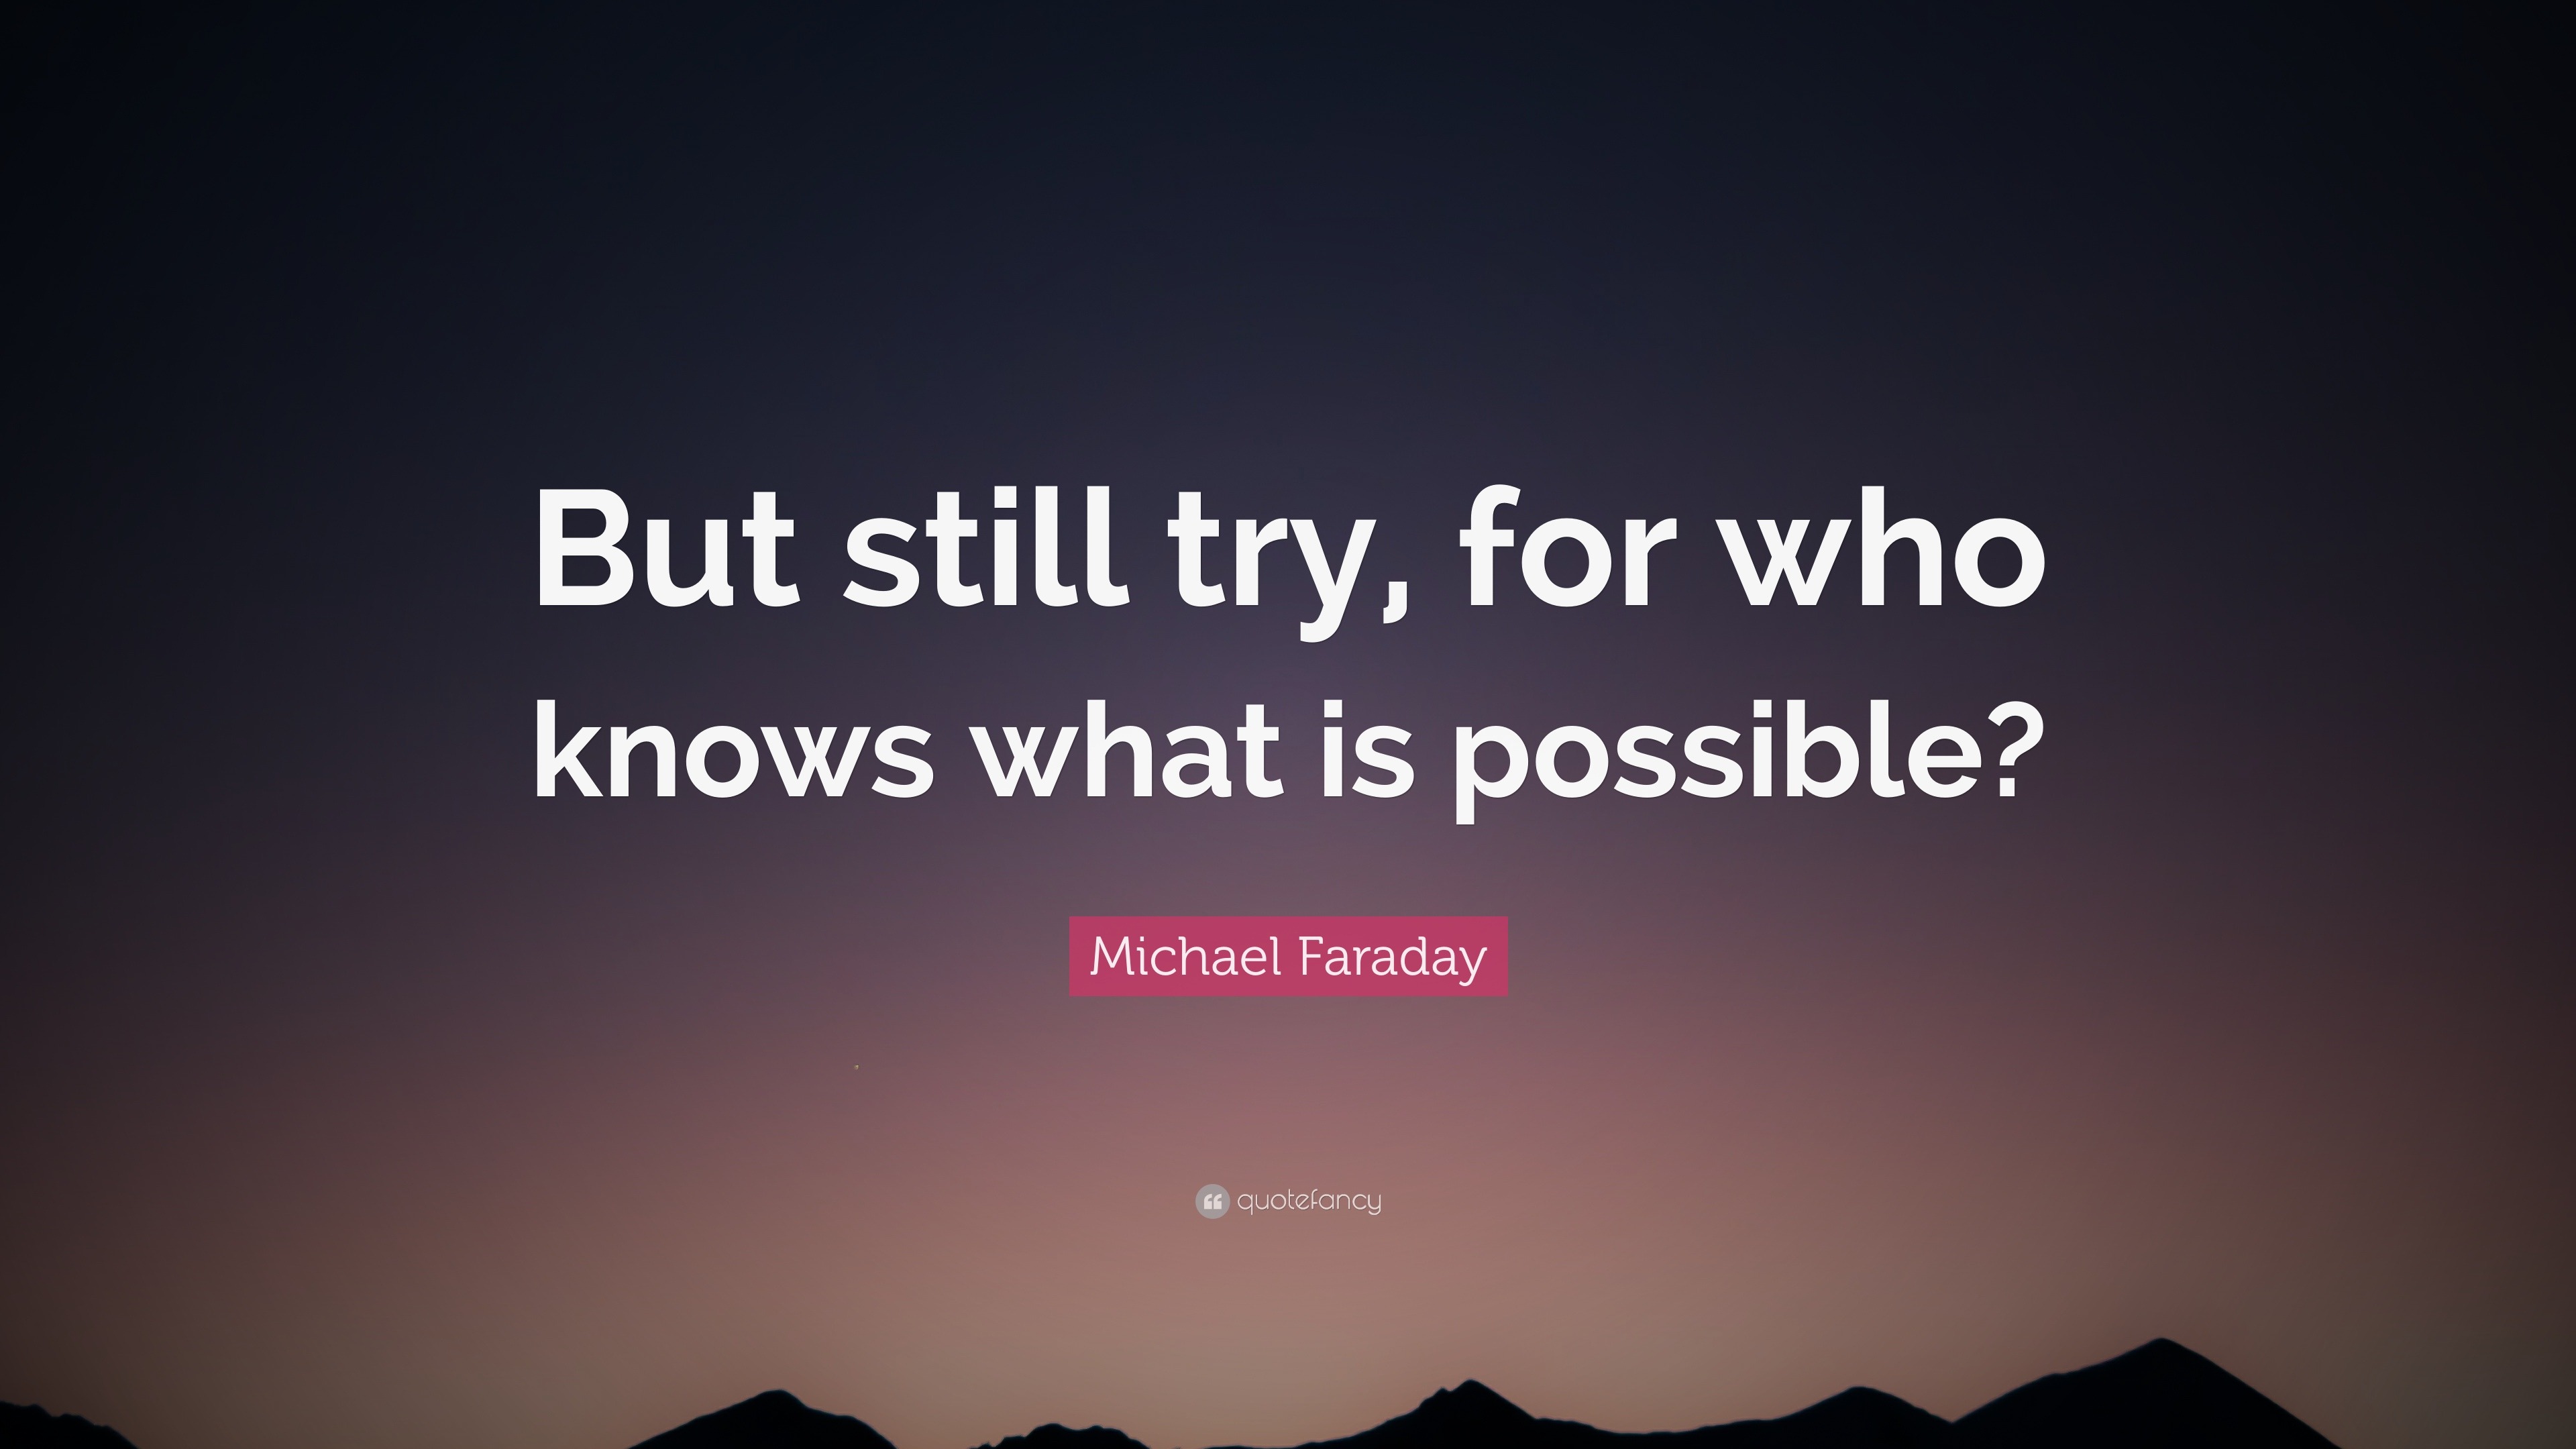 michael faraday quotes